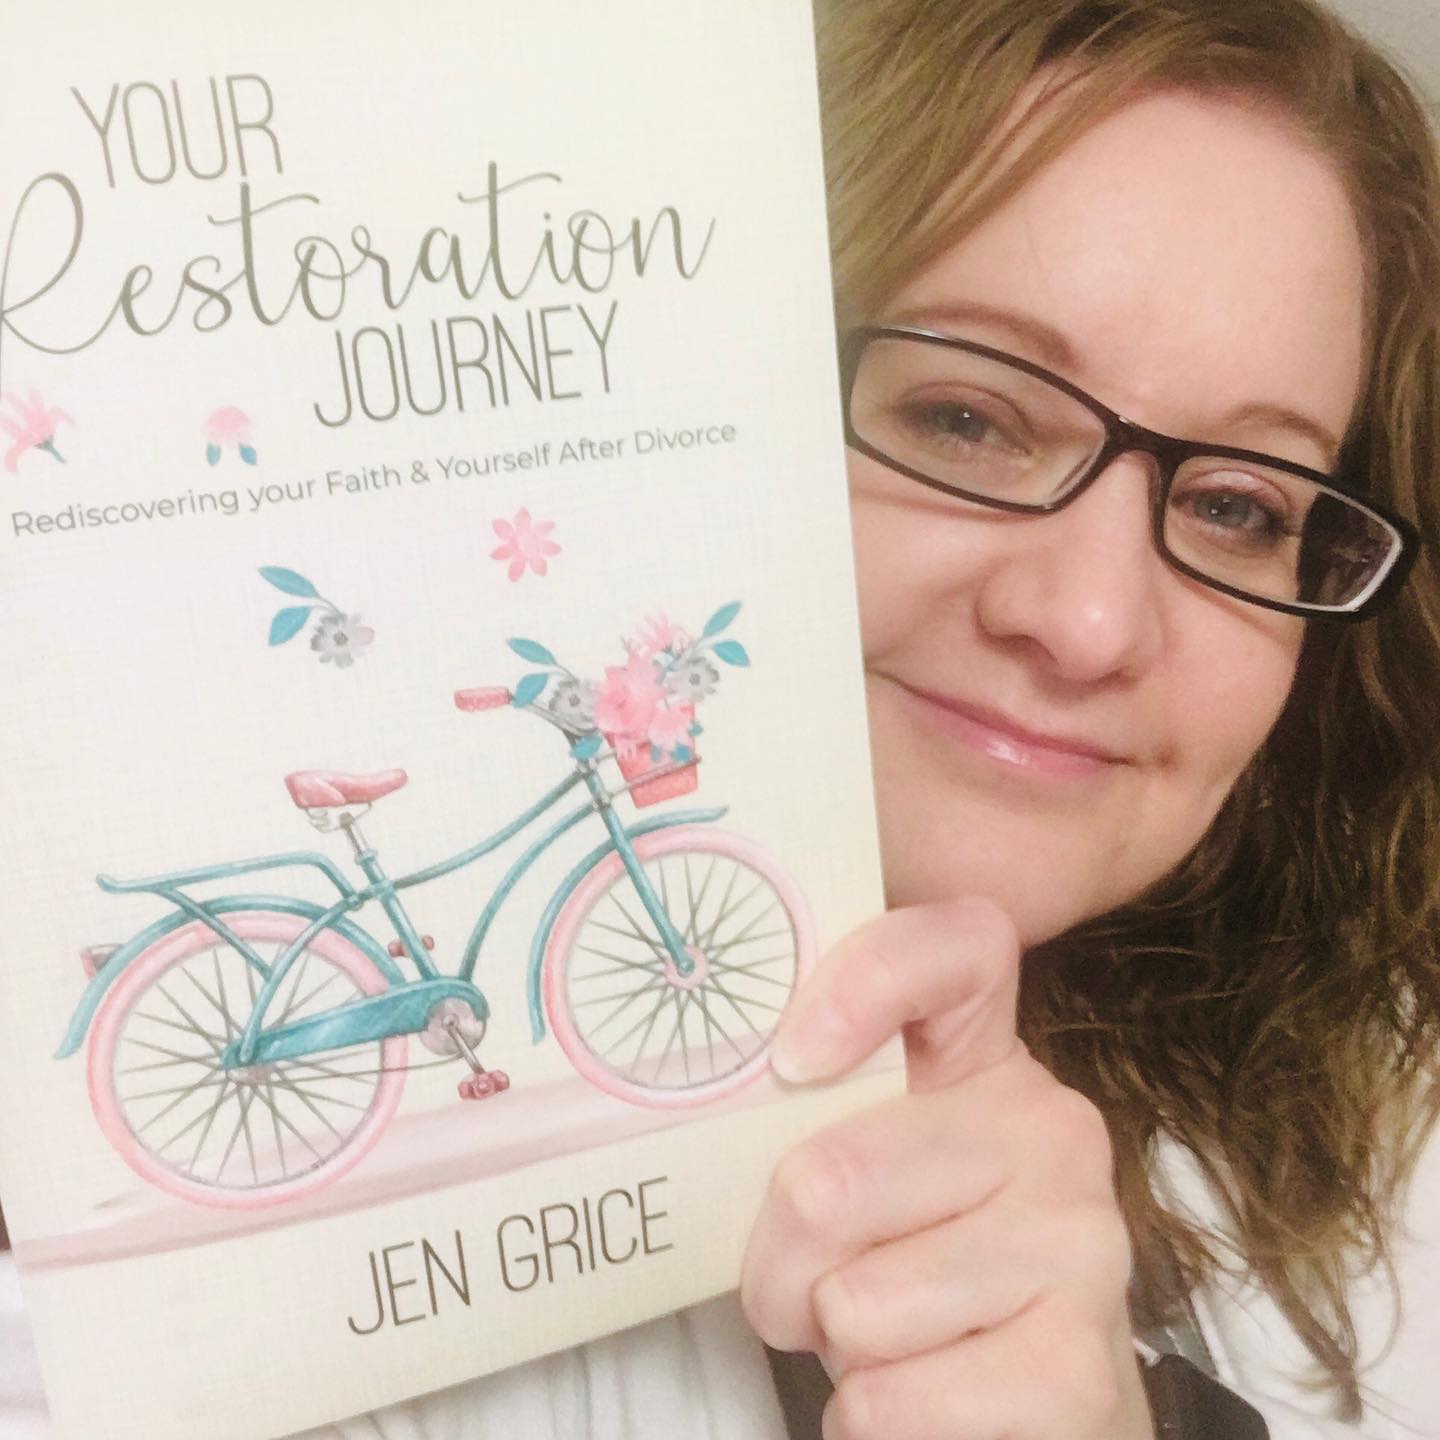 Your Restoration Journey Paperback Book